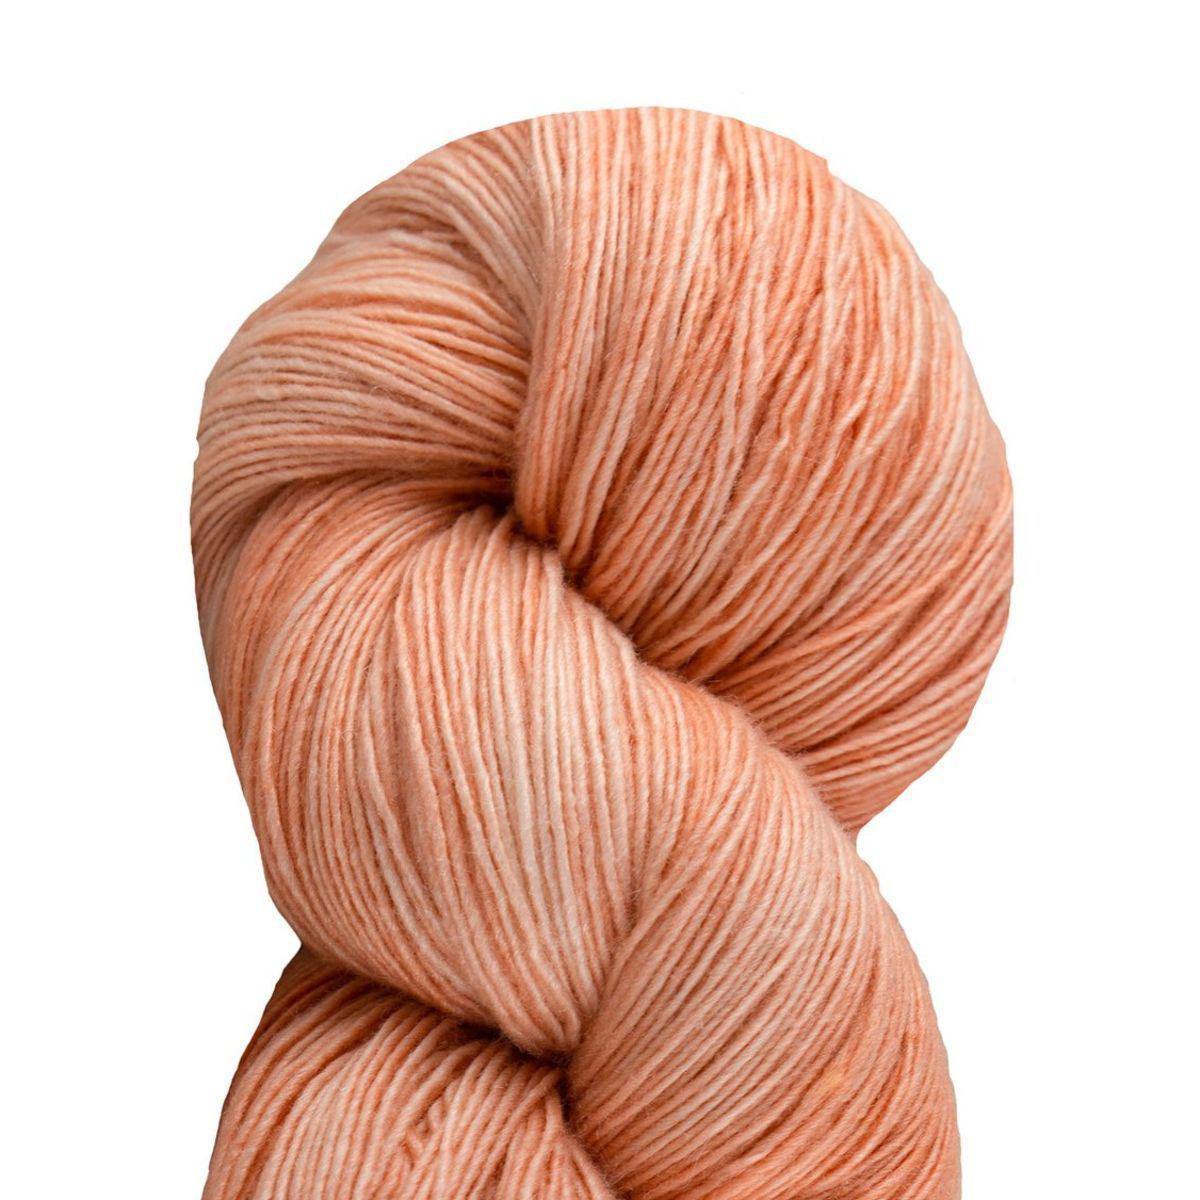 Clasica Wool - 55 - Olive — Manos Del Uruguay — Flying Fingers Yarn Shop